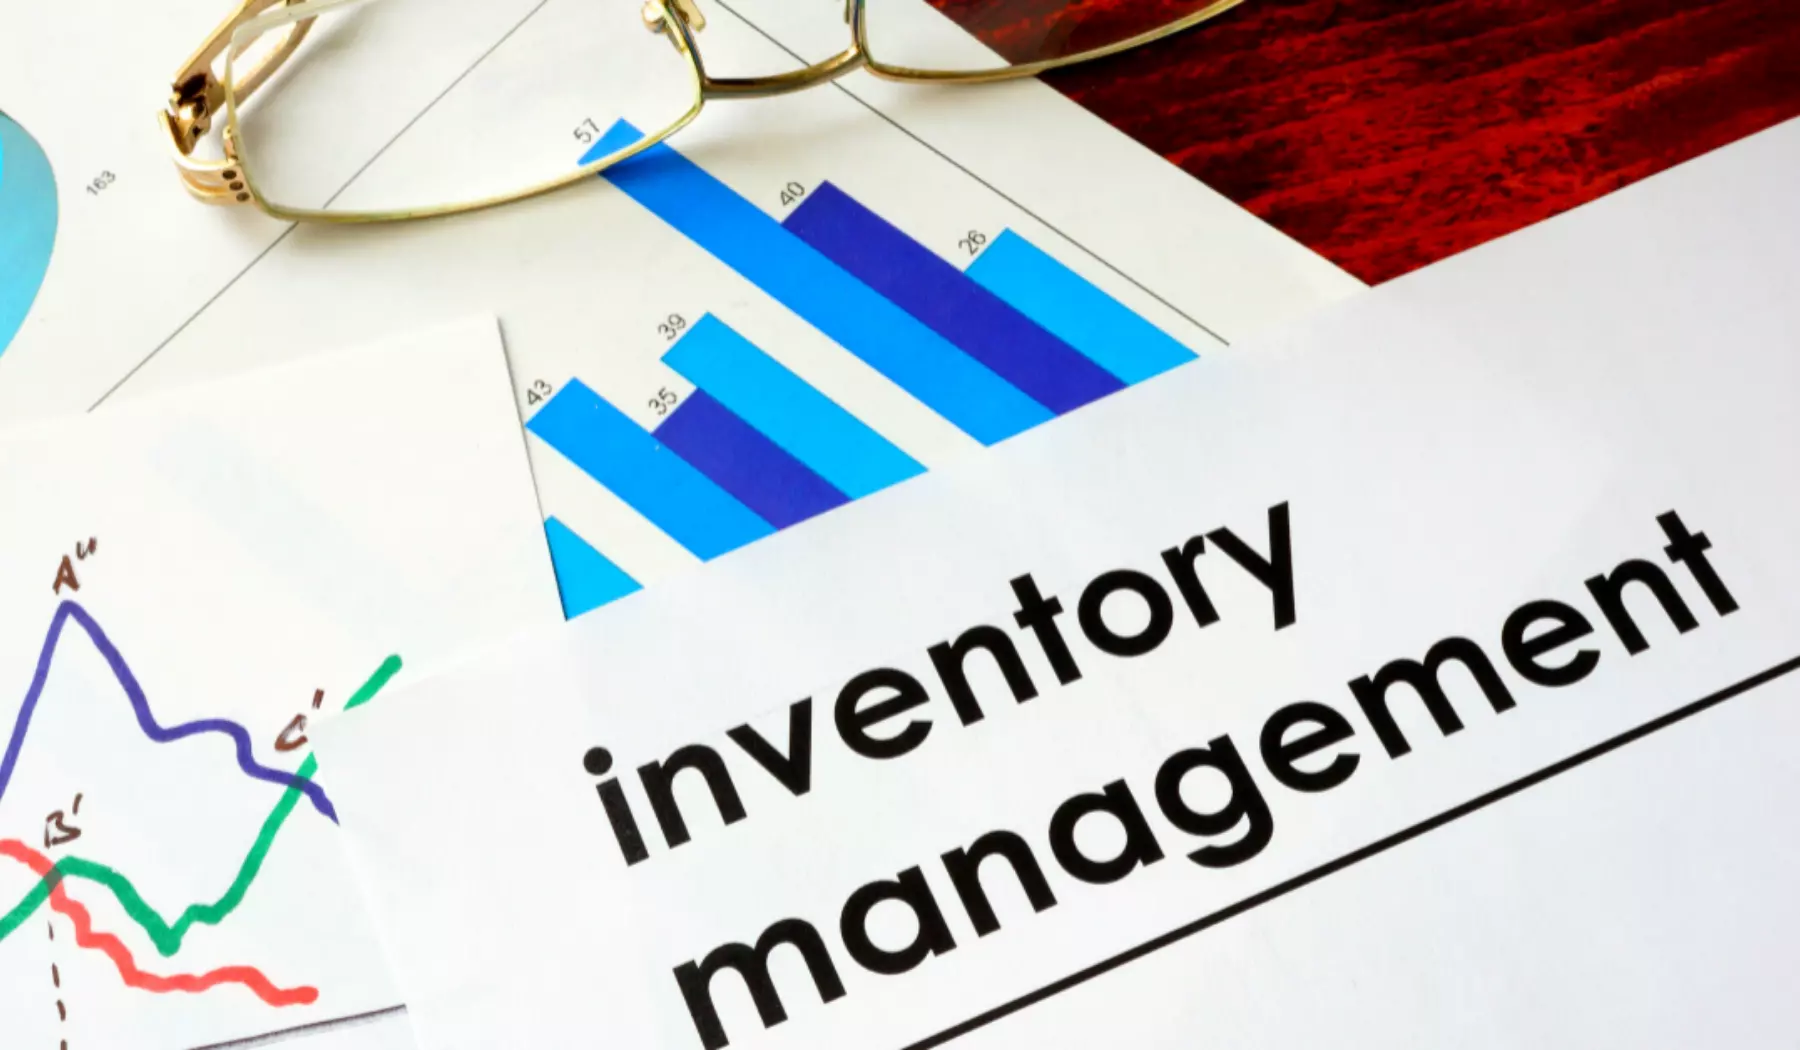 InventoryManagement